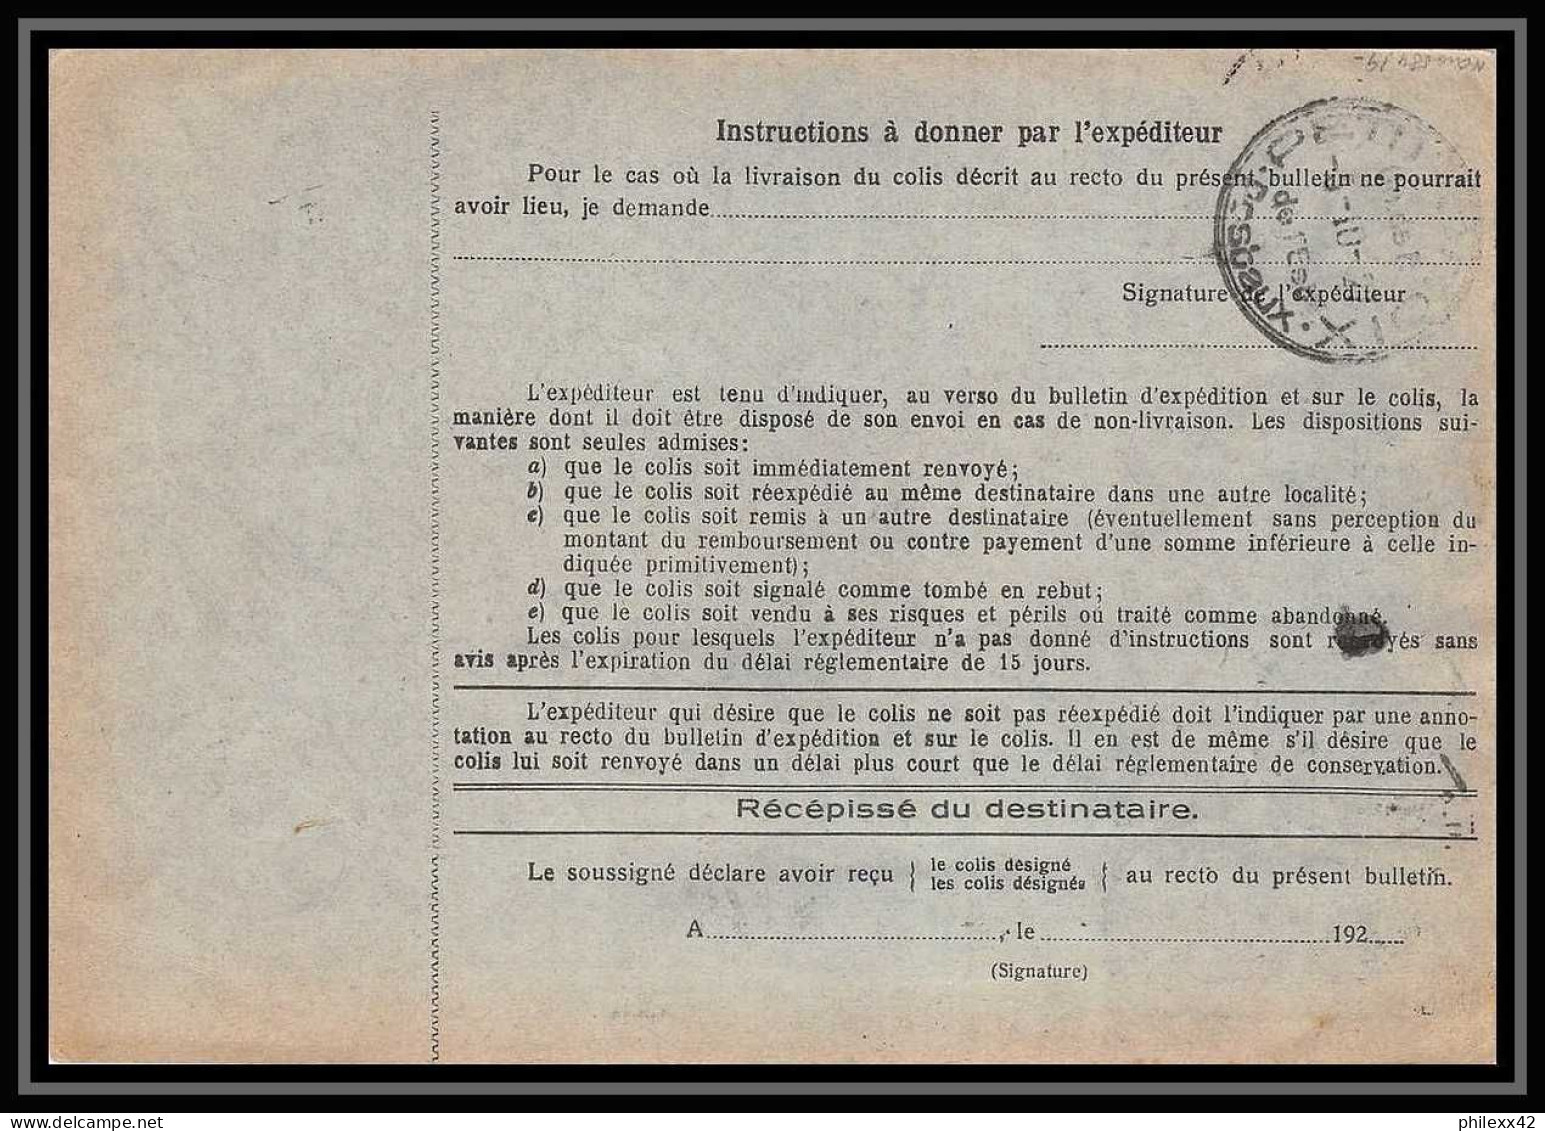 25241/ Bulletin D'expédition France Colis Postaux Fiscal Bas-Rhin Strasbourg 4 Pour Salins Jura 1927 Merson N°145 - Covers & Documents